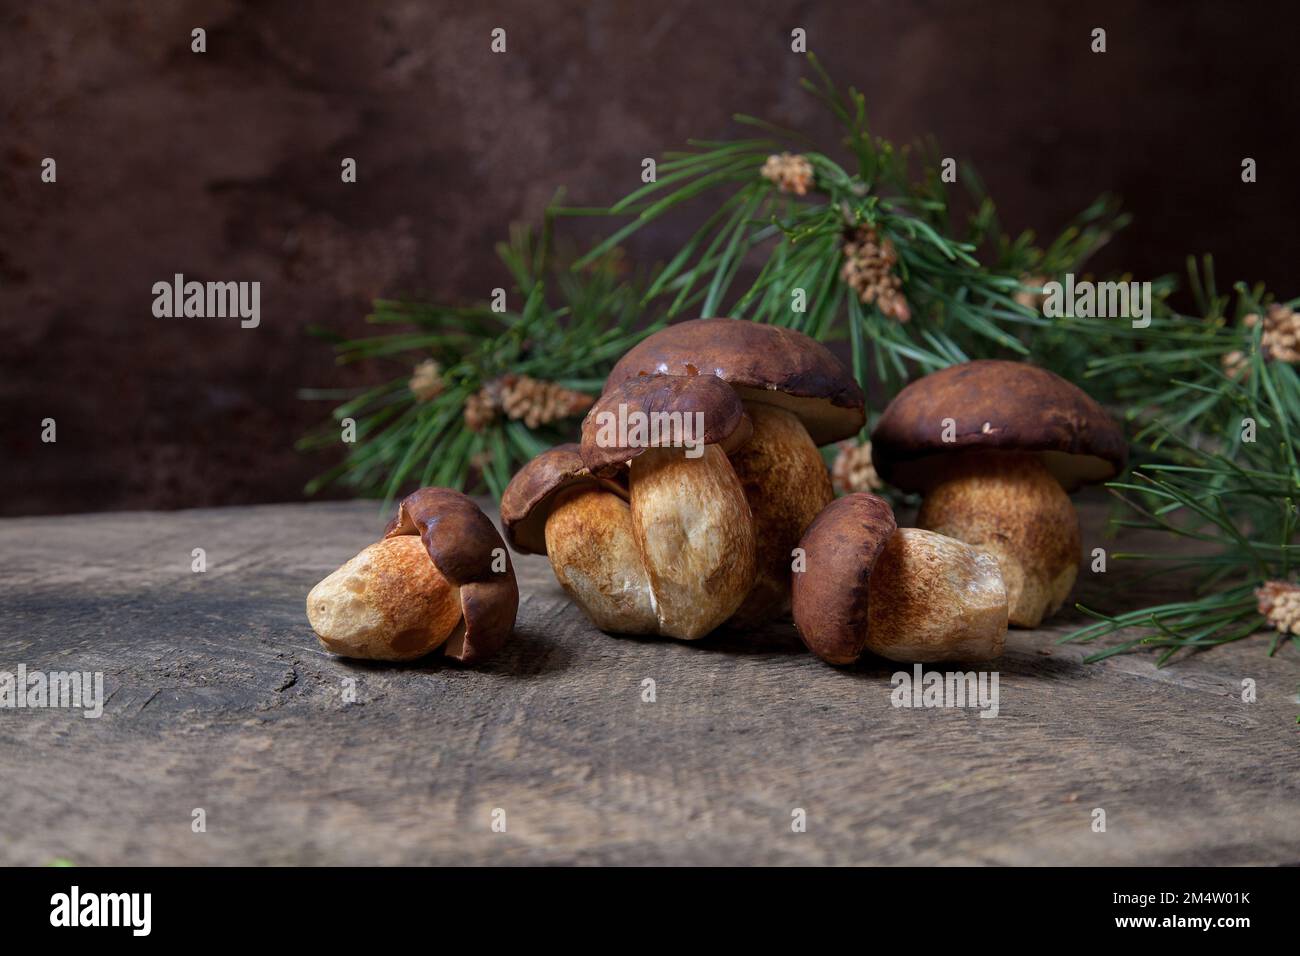 Autumn composition of several boletus badius, imleria badia or bay bolete mushrooms on vintage wooden background with green pine branch on back. Edibl Stock Photo